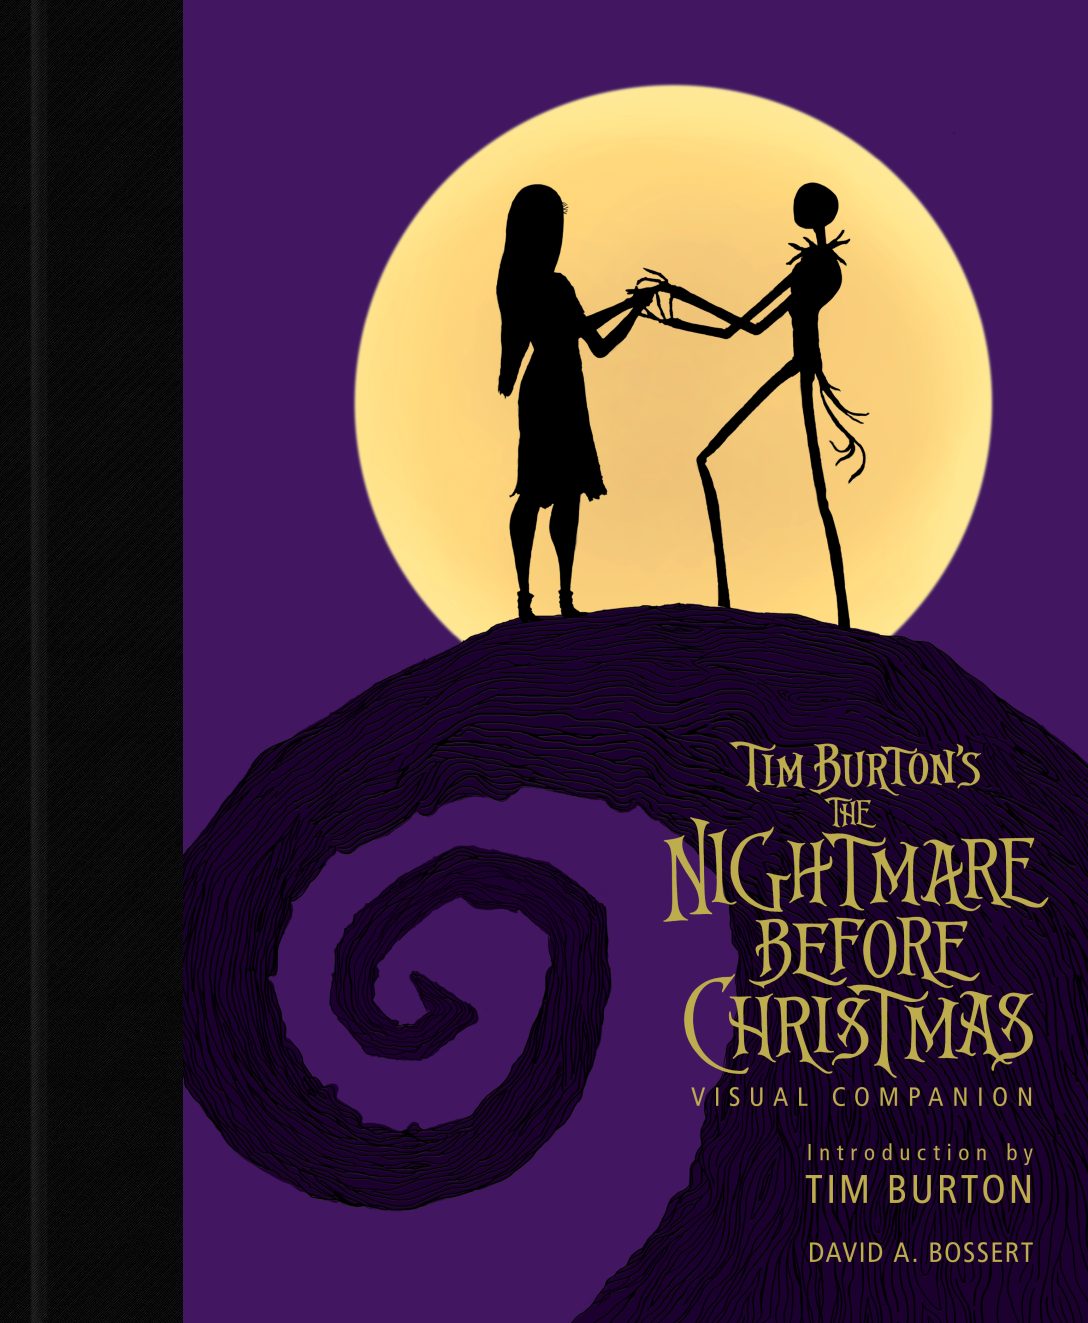 Tim Burton's The Nightmare Before Christmas Visual Companion by David A